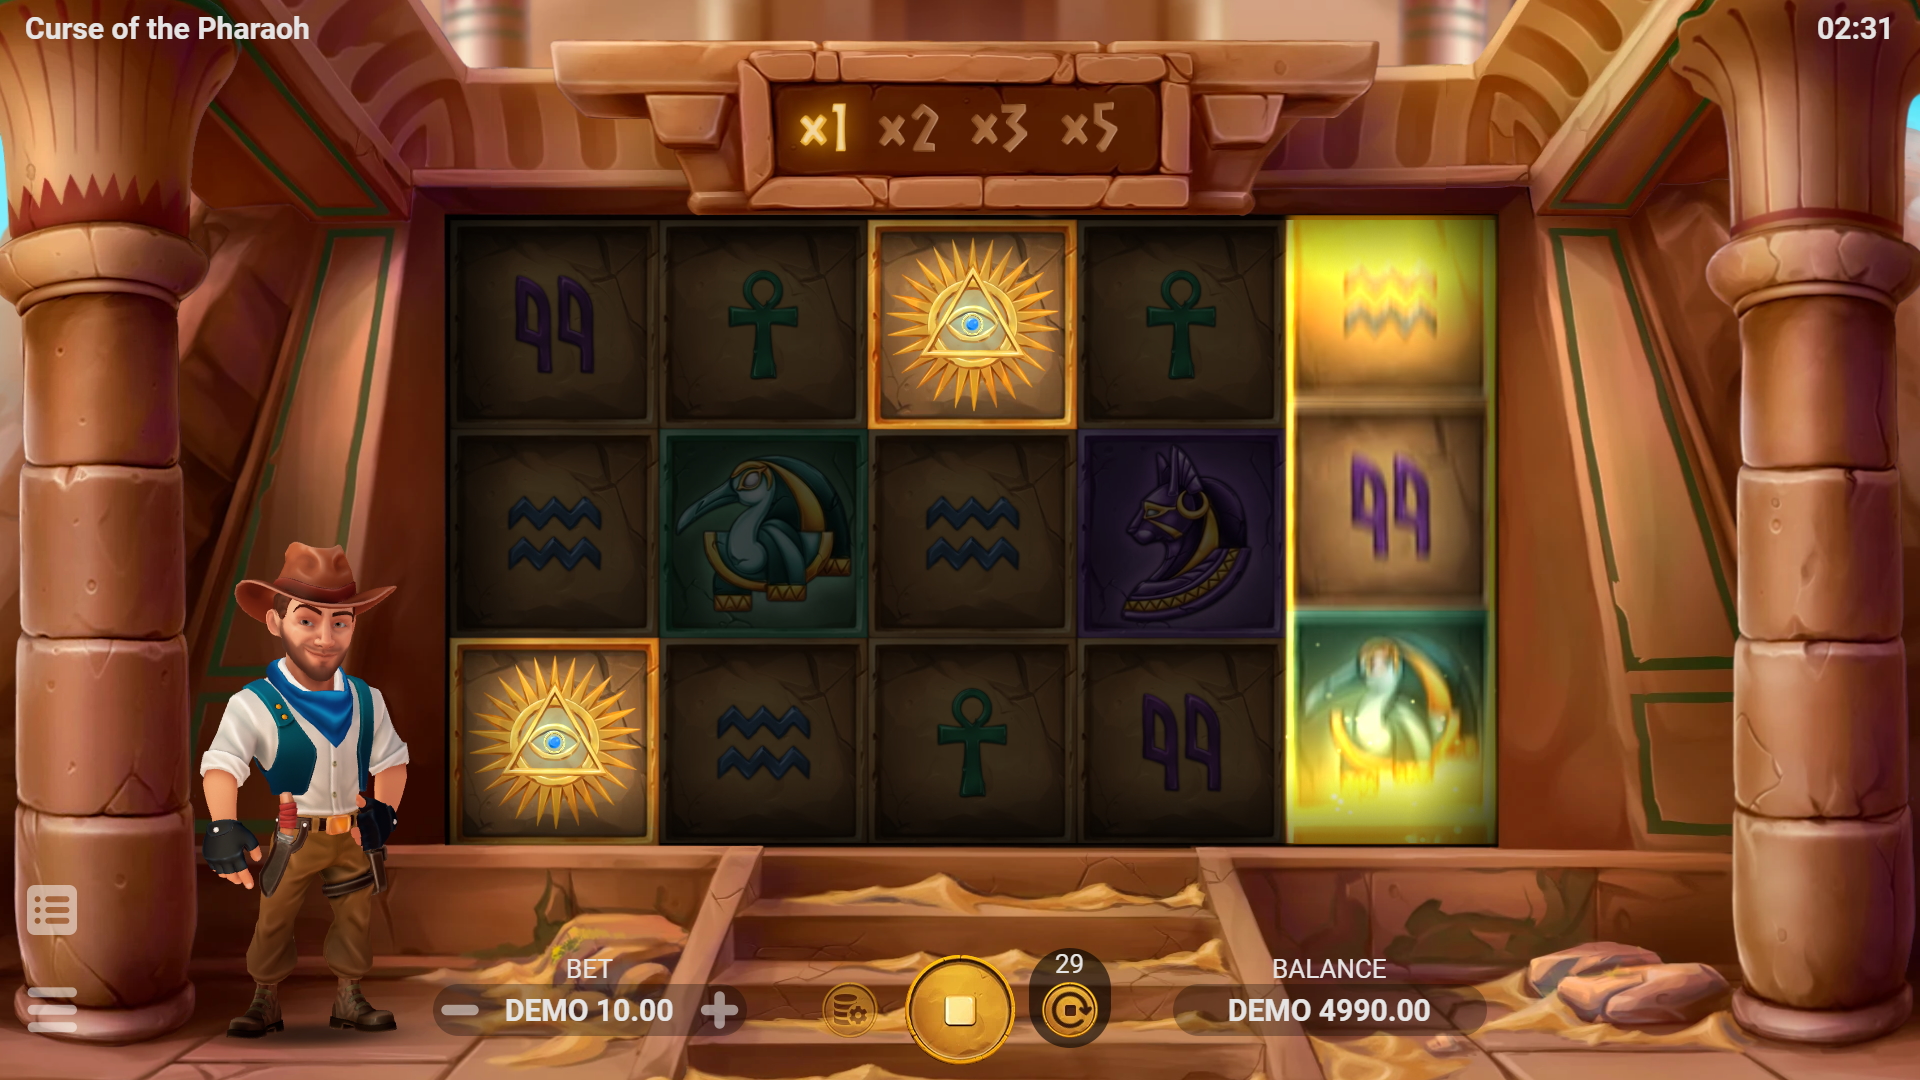 Curse of the Pharaoh 是一款老虎機遊戲由合作夥伴 Evoplay 所提供 - 樂遊國際GamingSoft